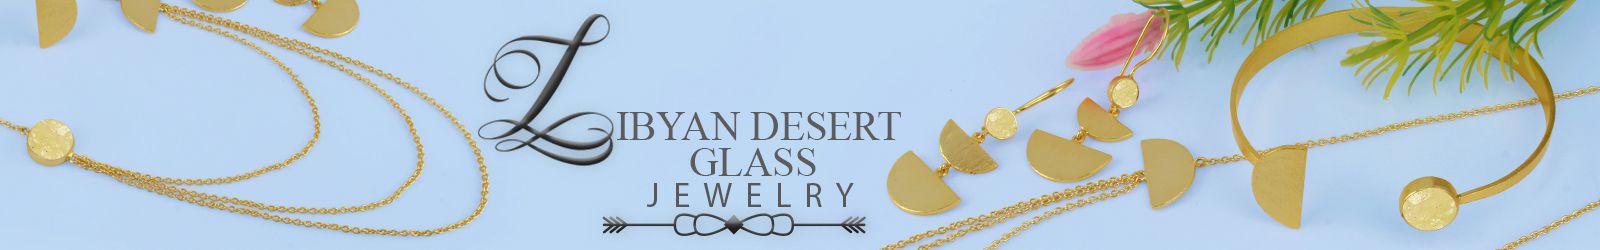 Silver Libyan Desert Glass Jewelry Wholesale Supplier